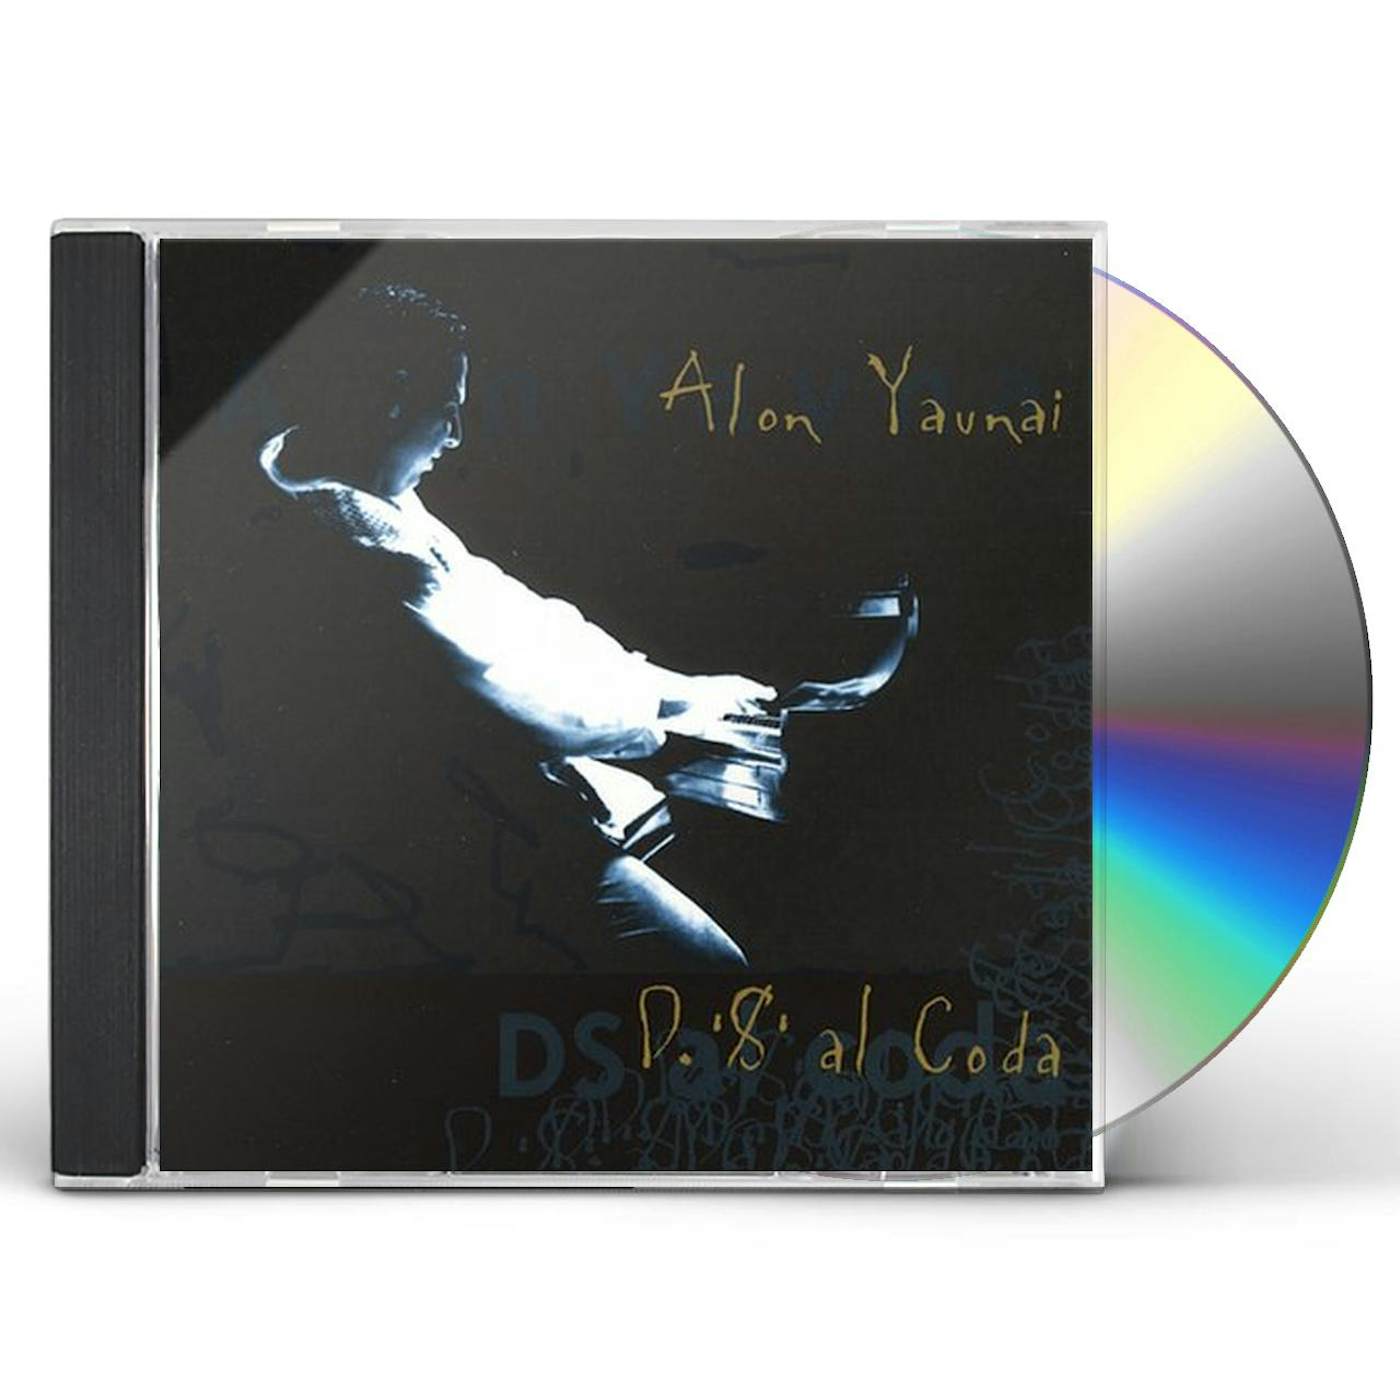 Alon Yavnai D.S. AL CODA CD